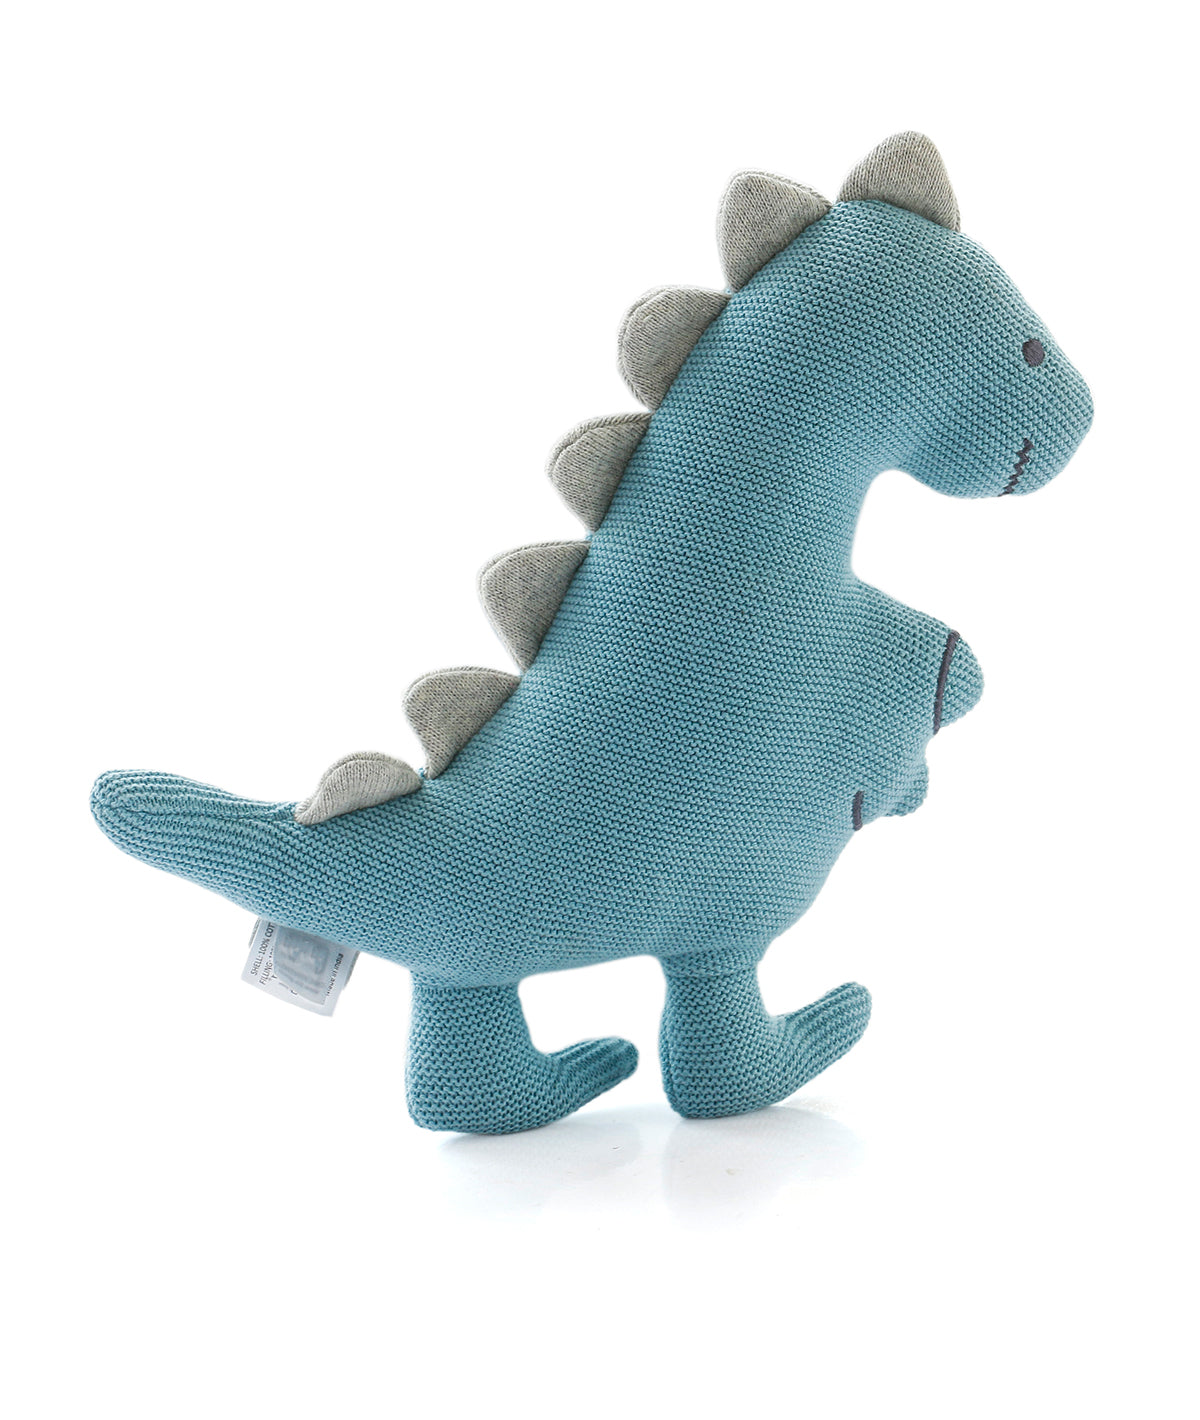 Cute Dino-Cotton Knitted Stuffed Soft Toy For Babies & Kids (Medium Blue & Light Grey Melange)